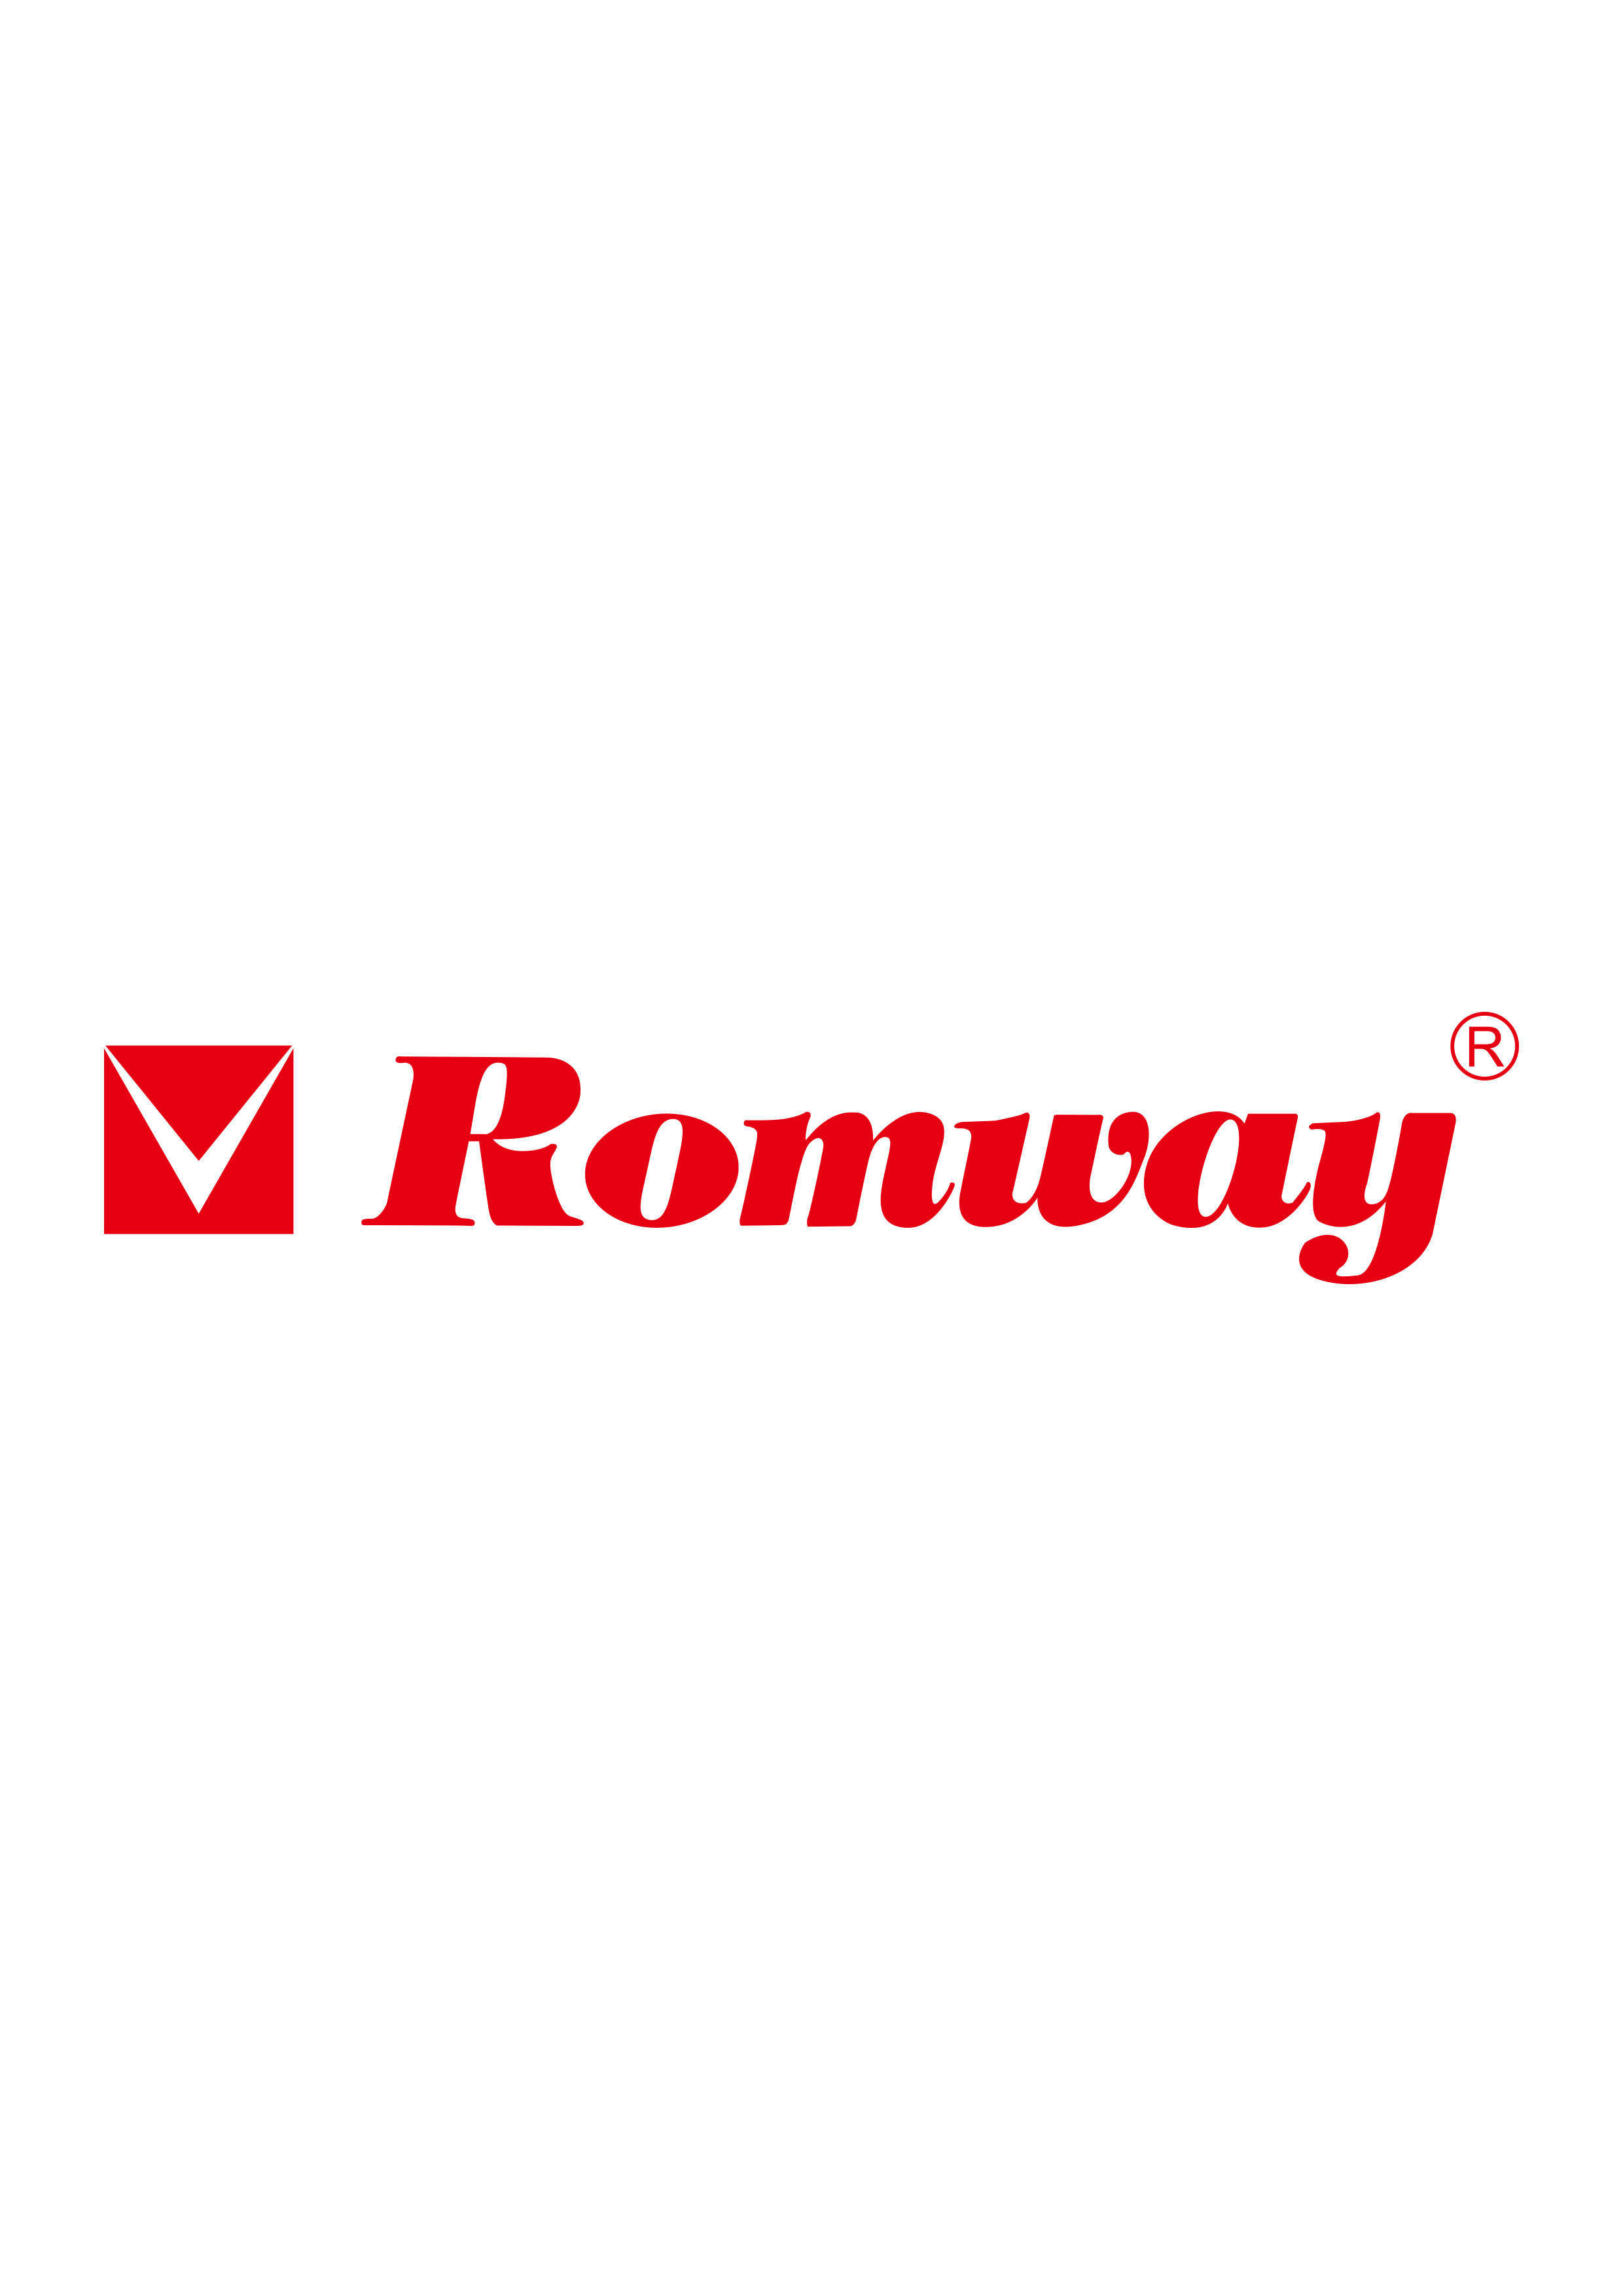 ROMWAY(SZ) MACHINERY MANUFACTURING CO., LTD.